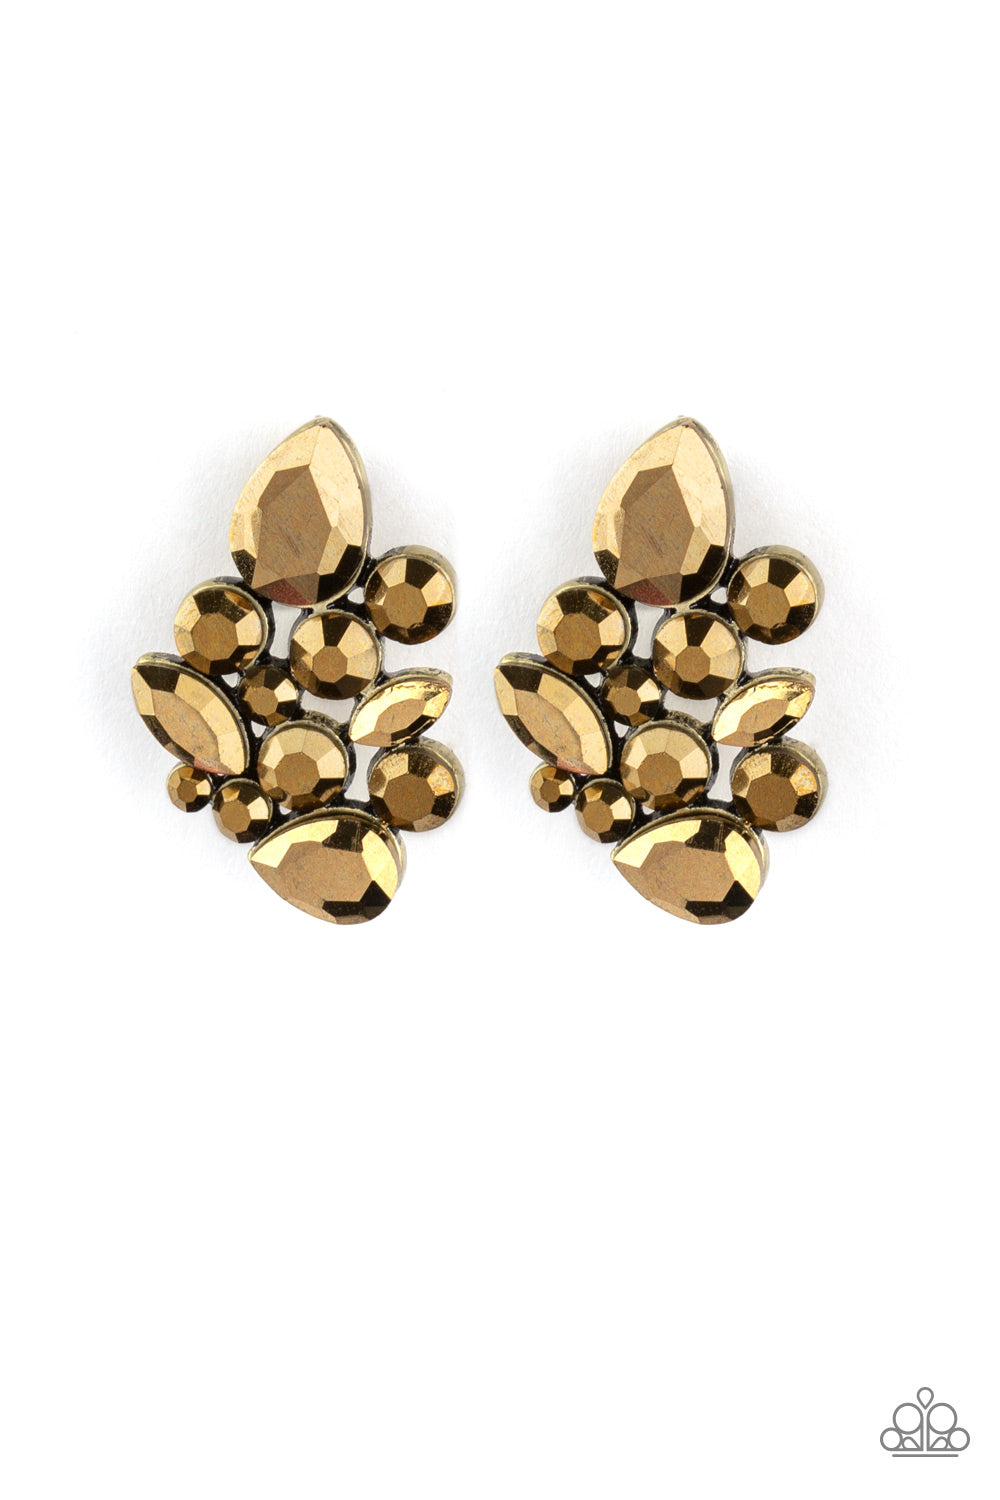 Galaxy Glimmer - Brass Earrings - Princess Glam Shop